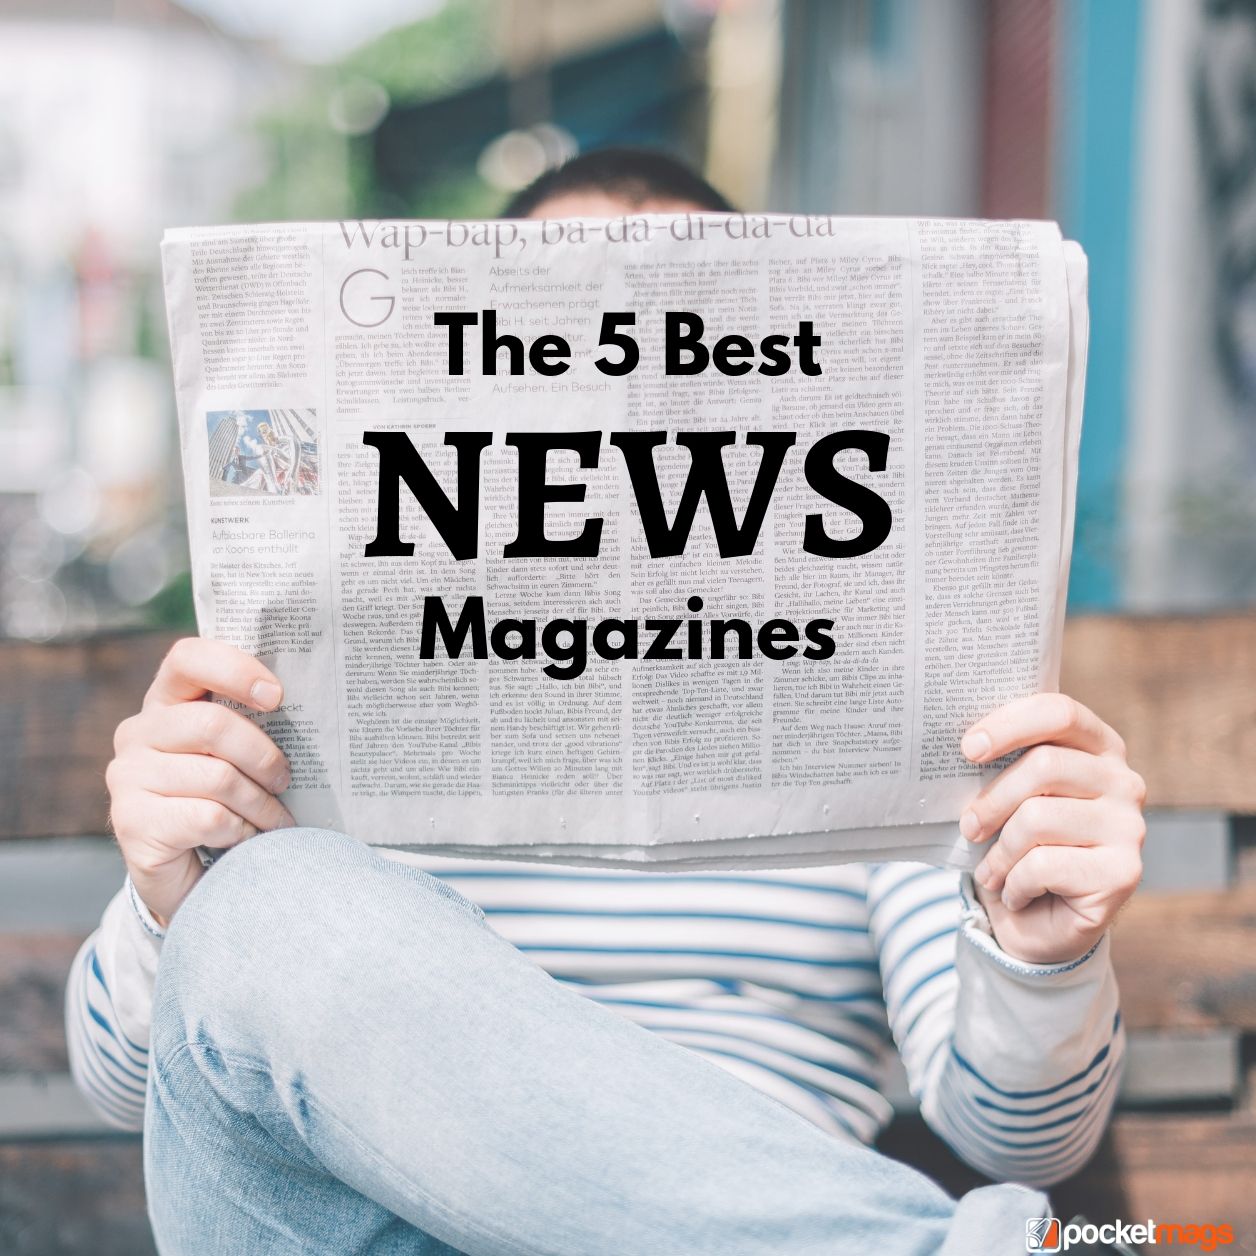 The 5 Best News Magazines